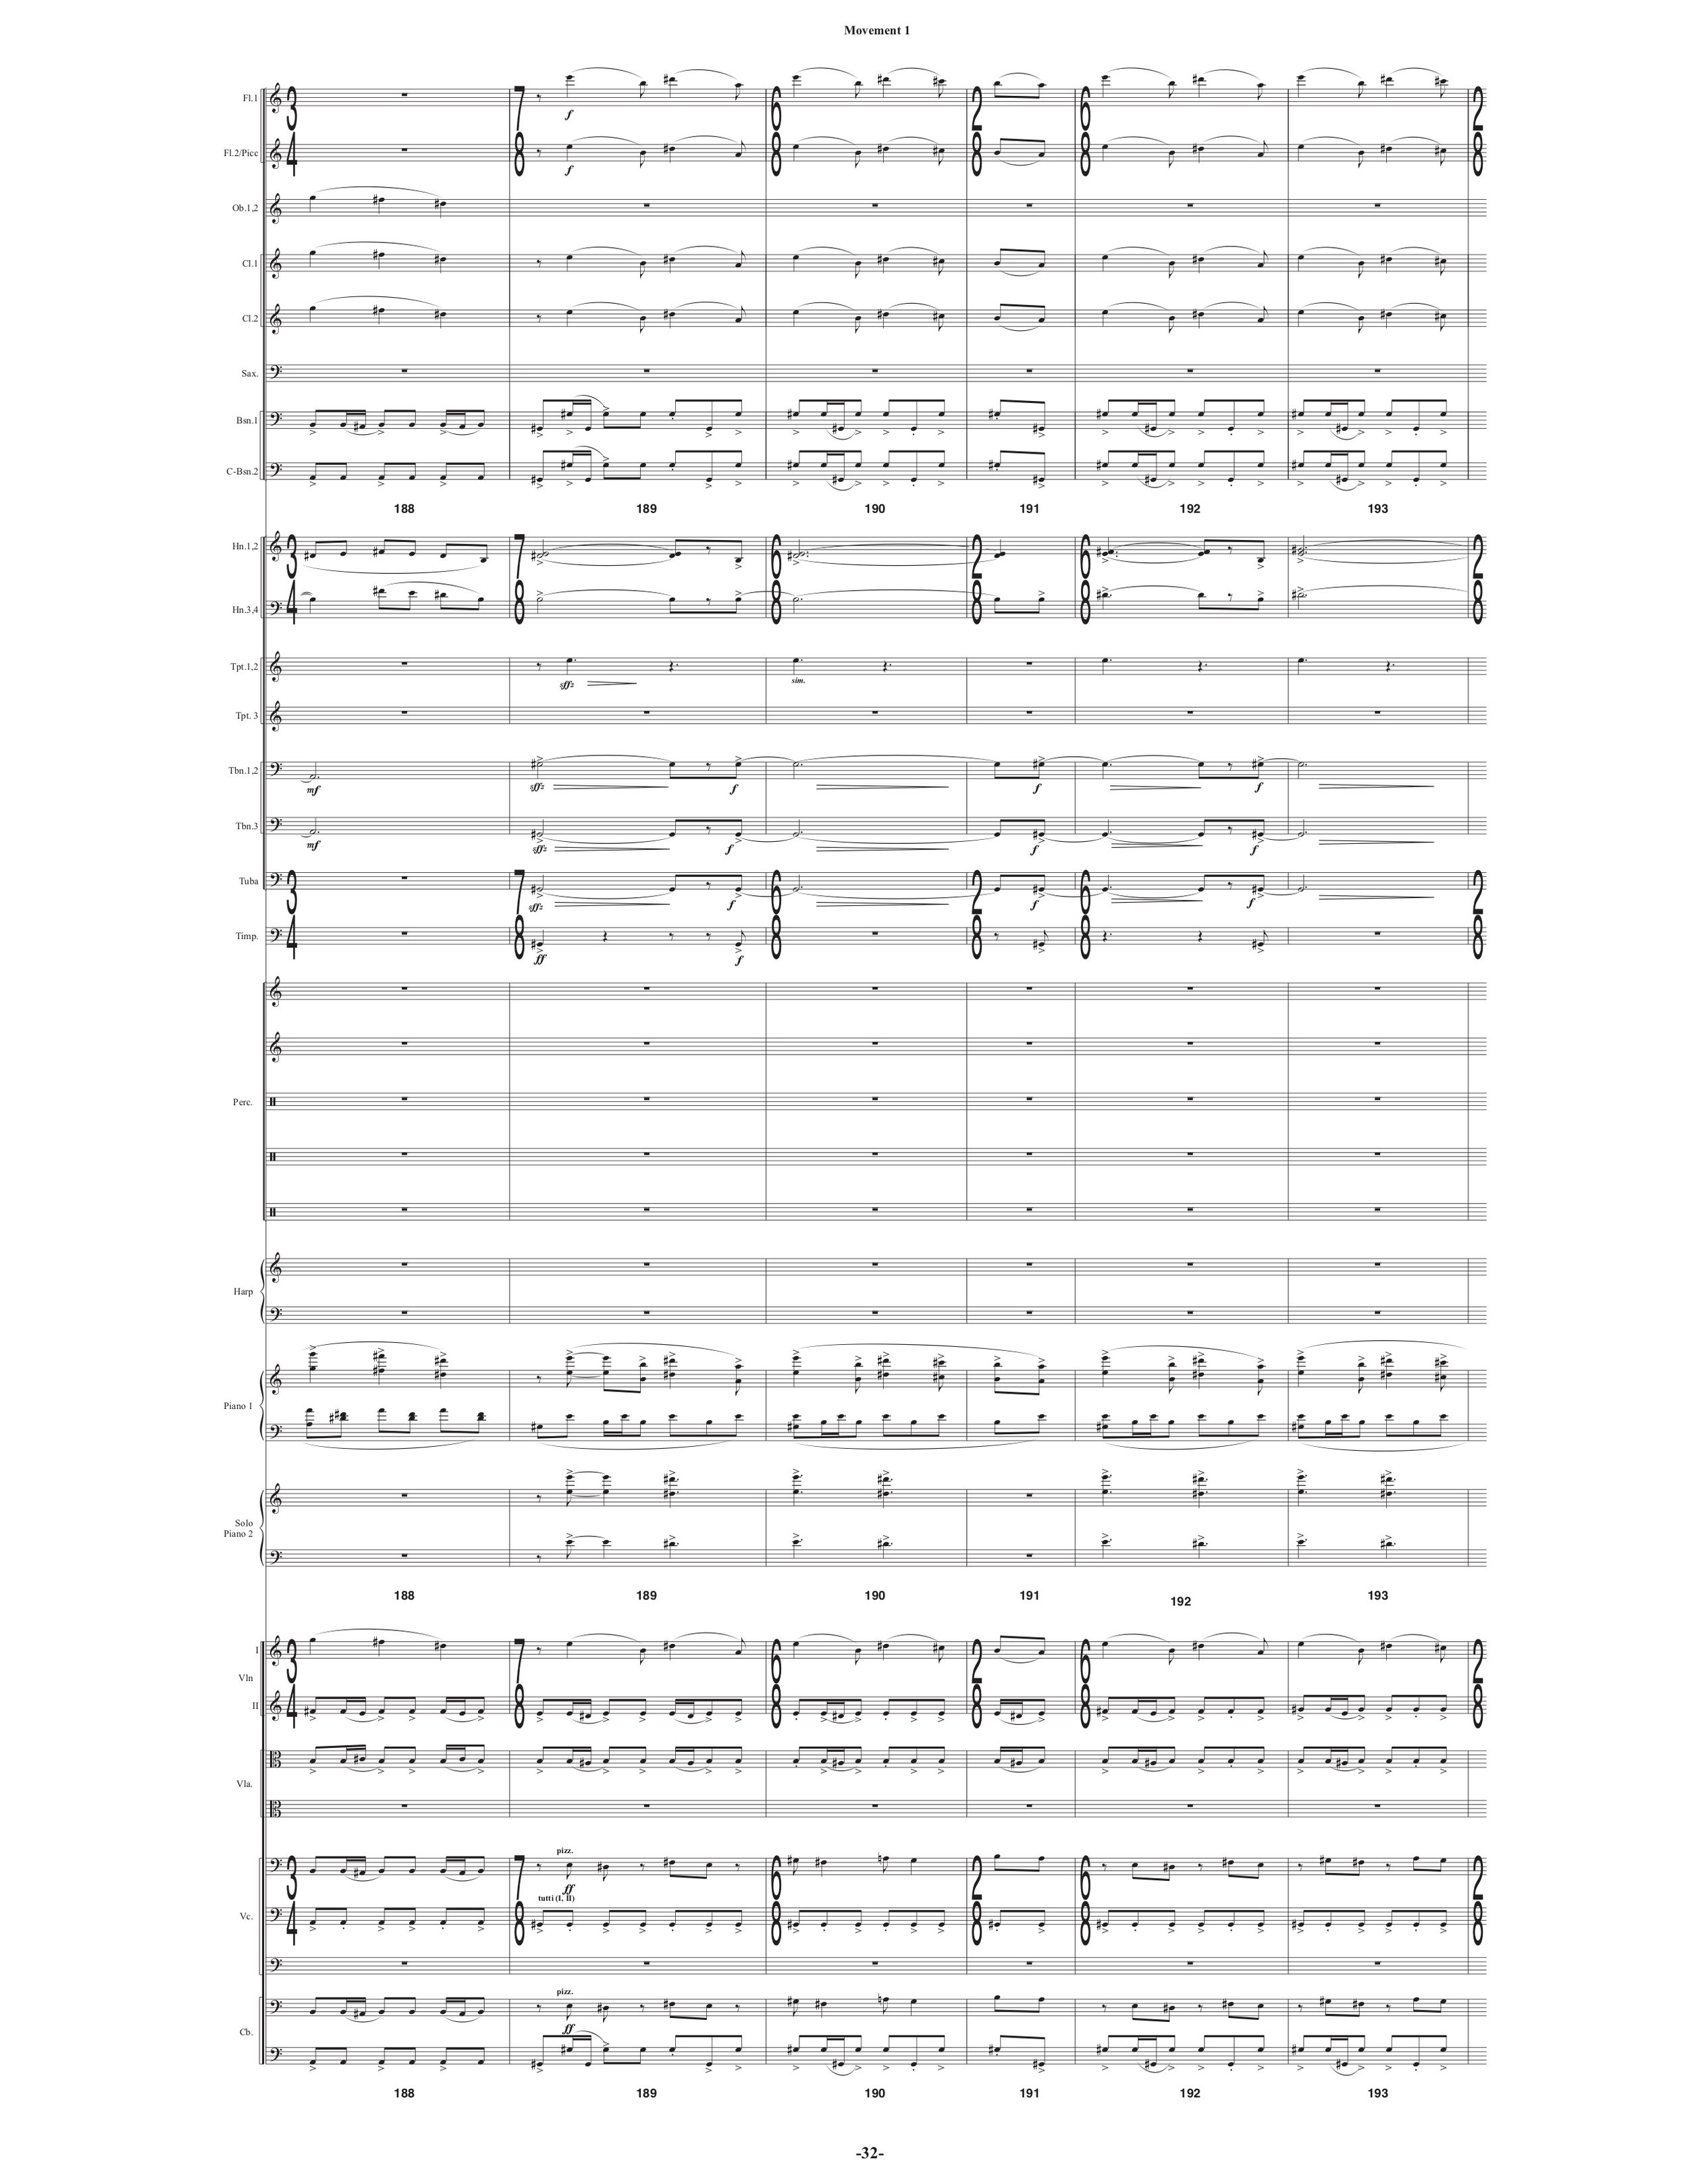 Symphony_Orch & 2 Pianos p37.jpg